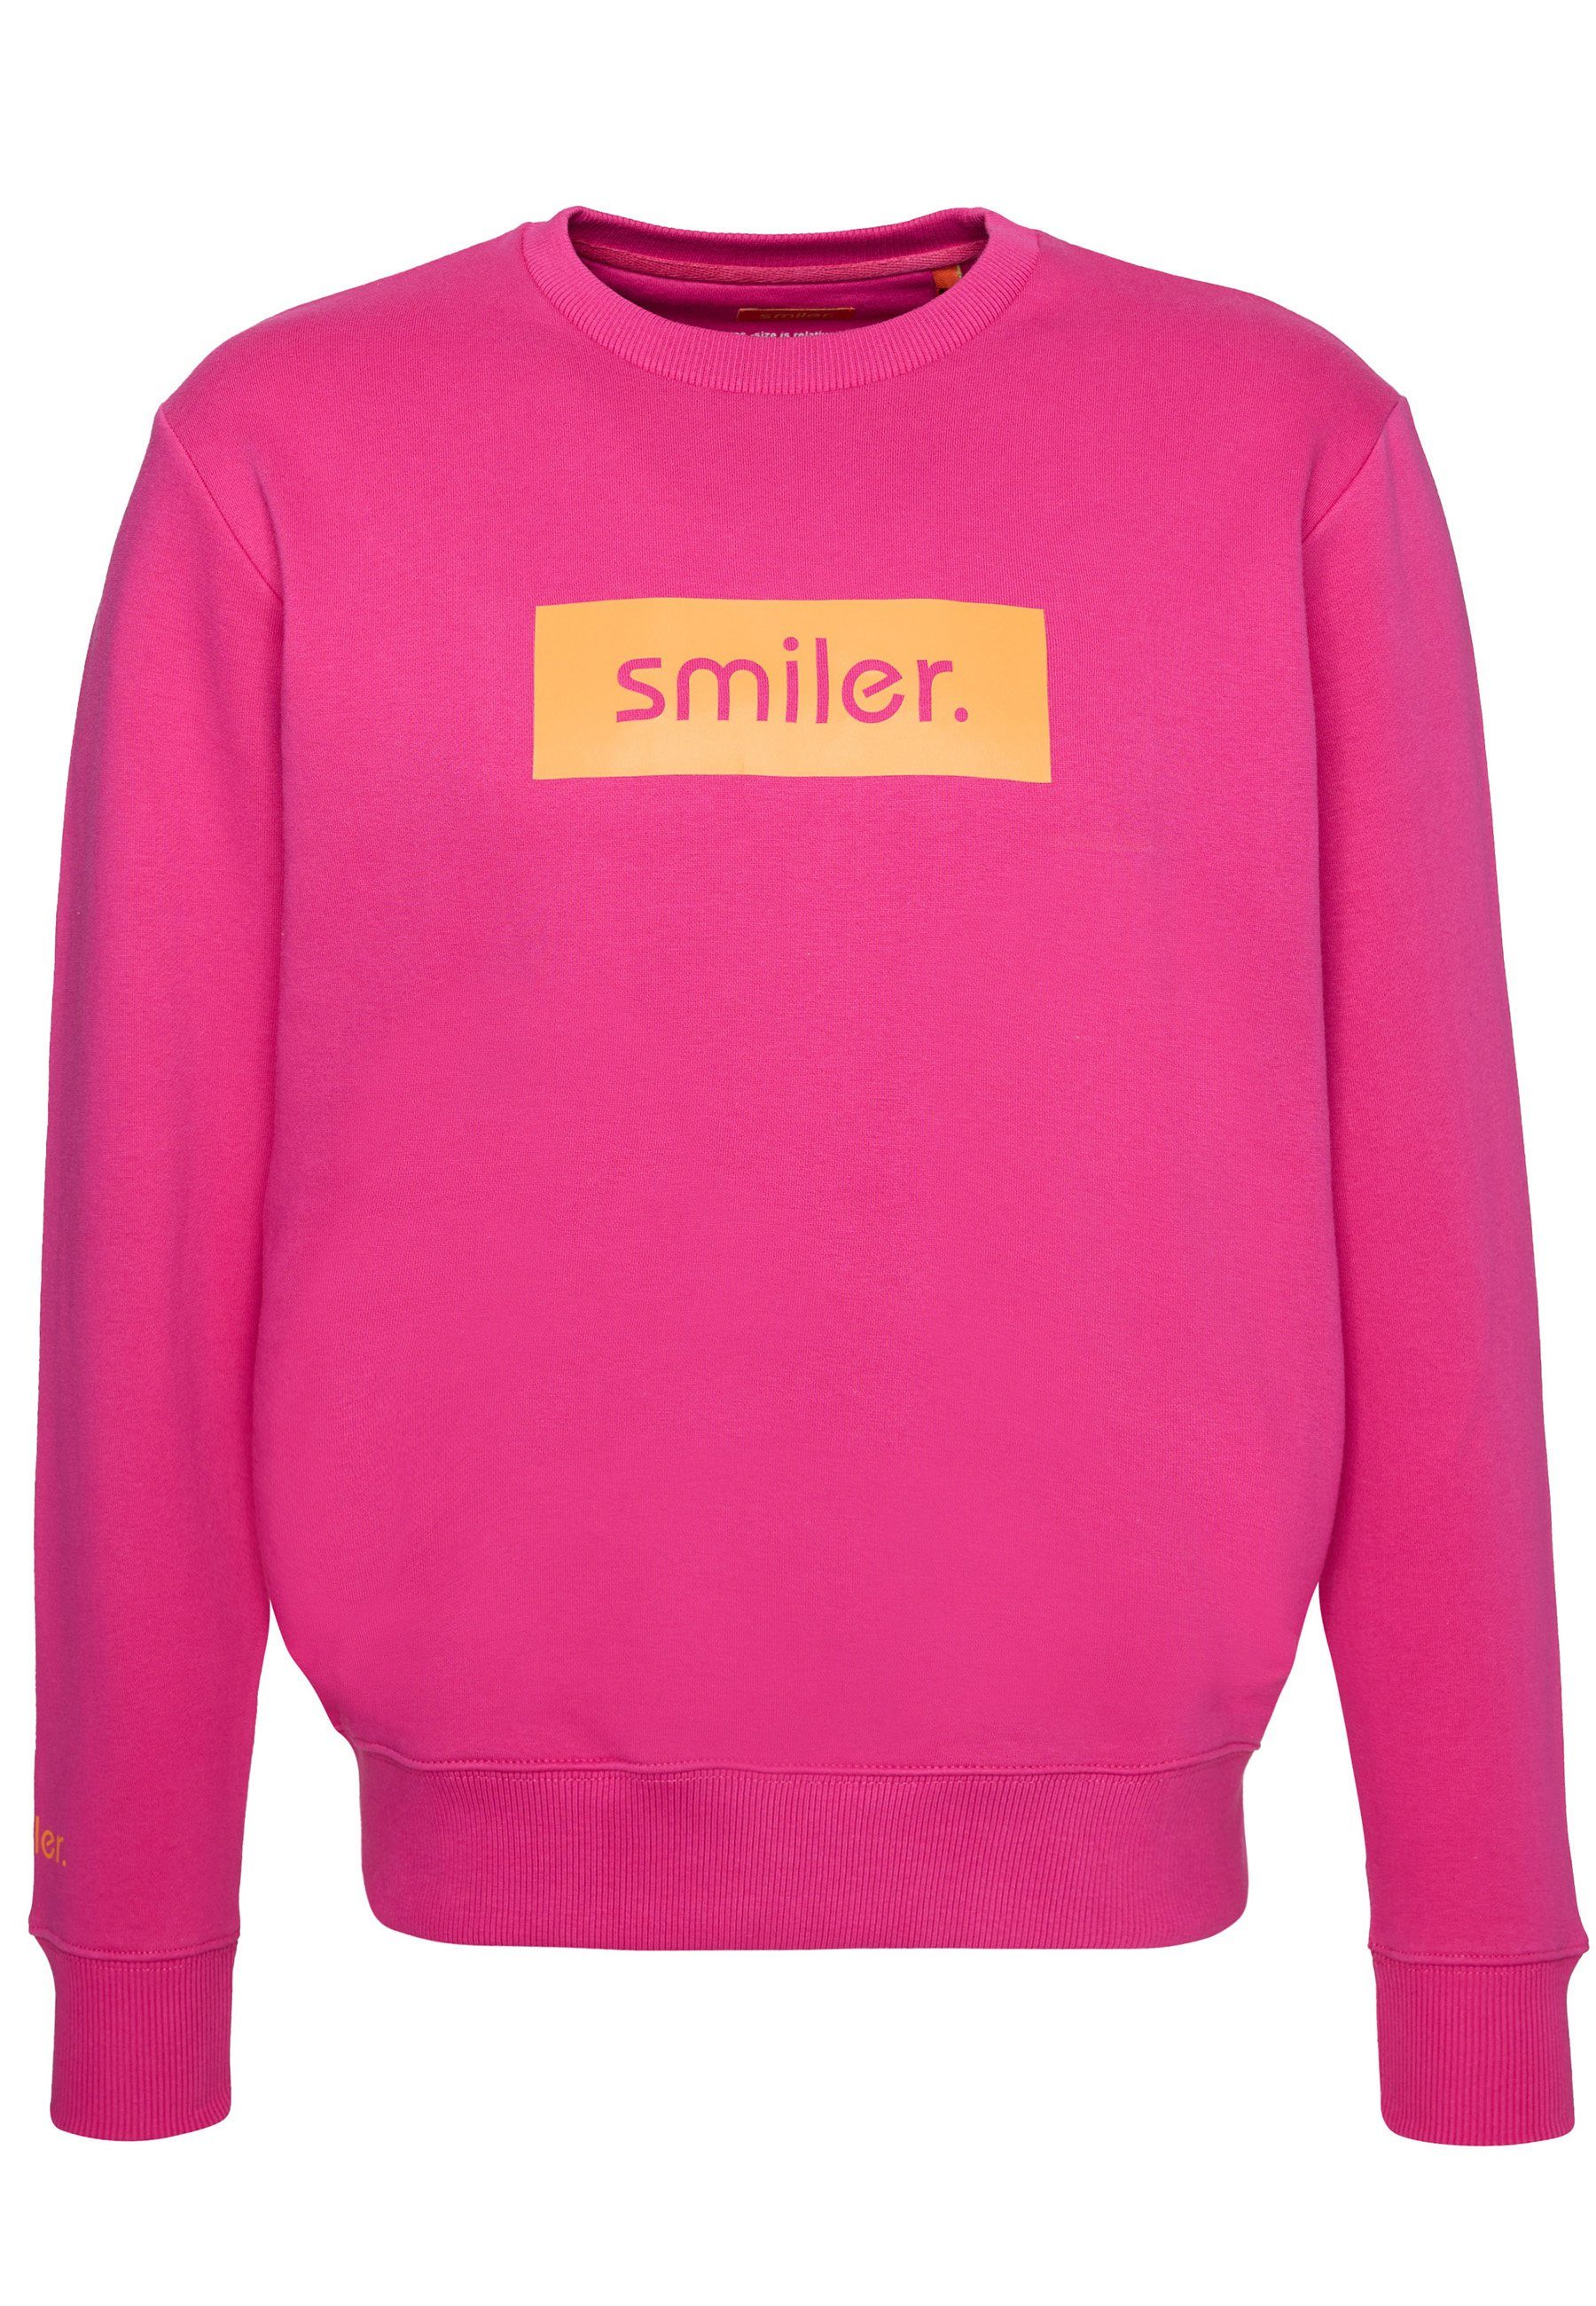 smiler. Fleecepullover Cuddle. pink